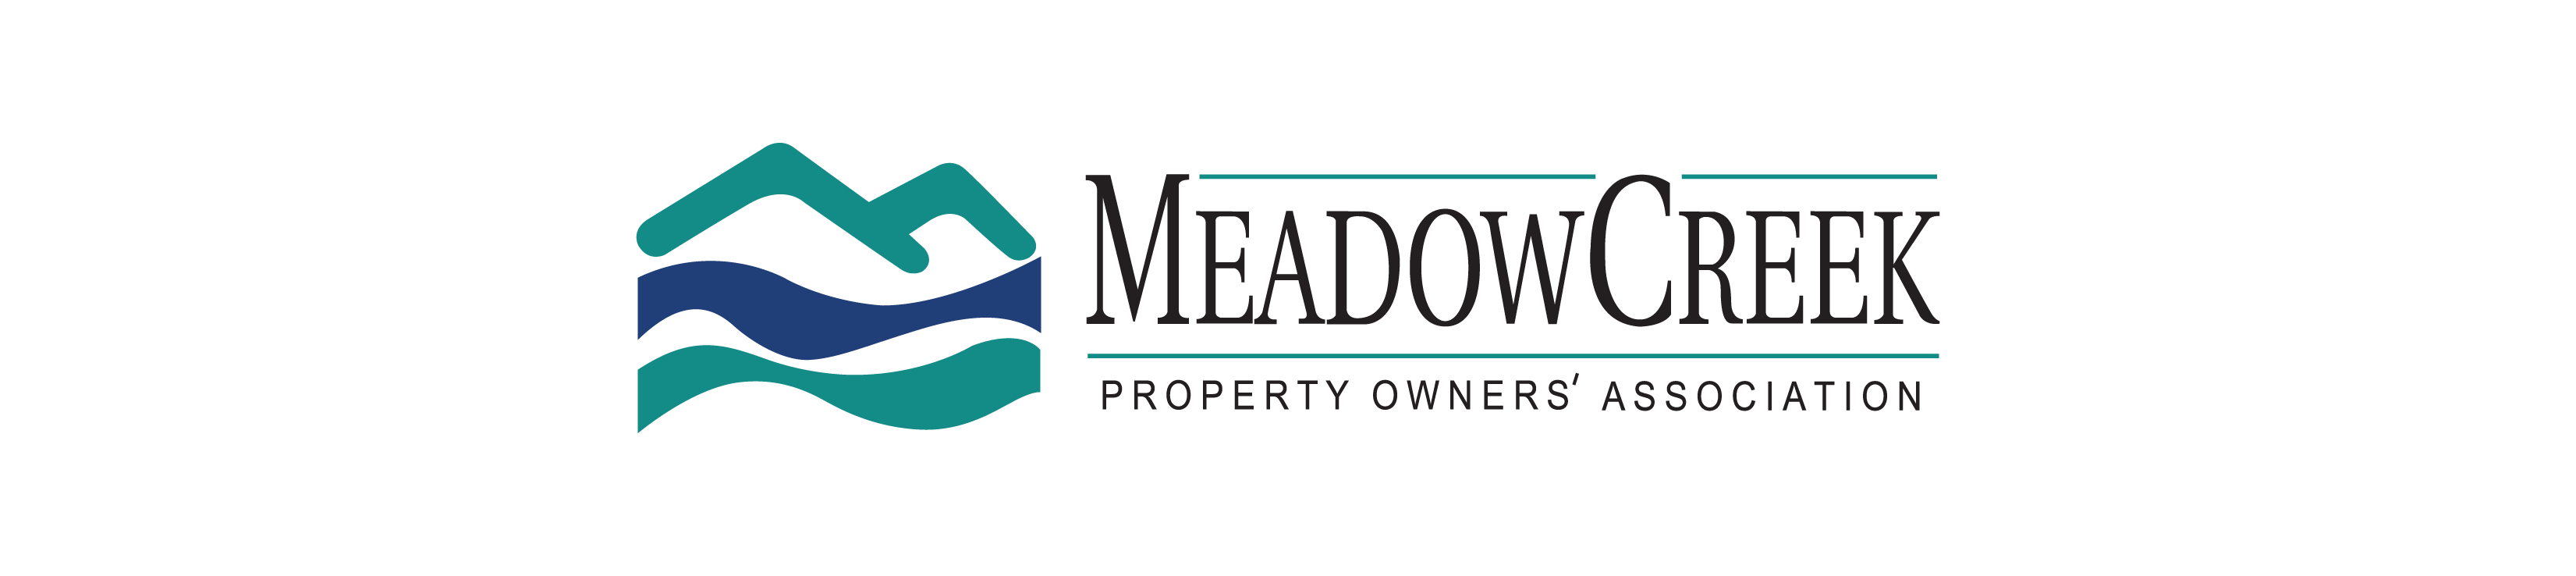 MeadowCreek Property Owners' Association (MCPOA)